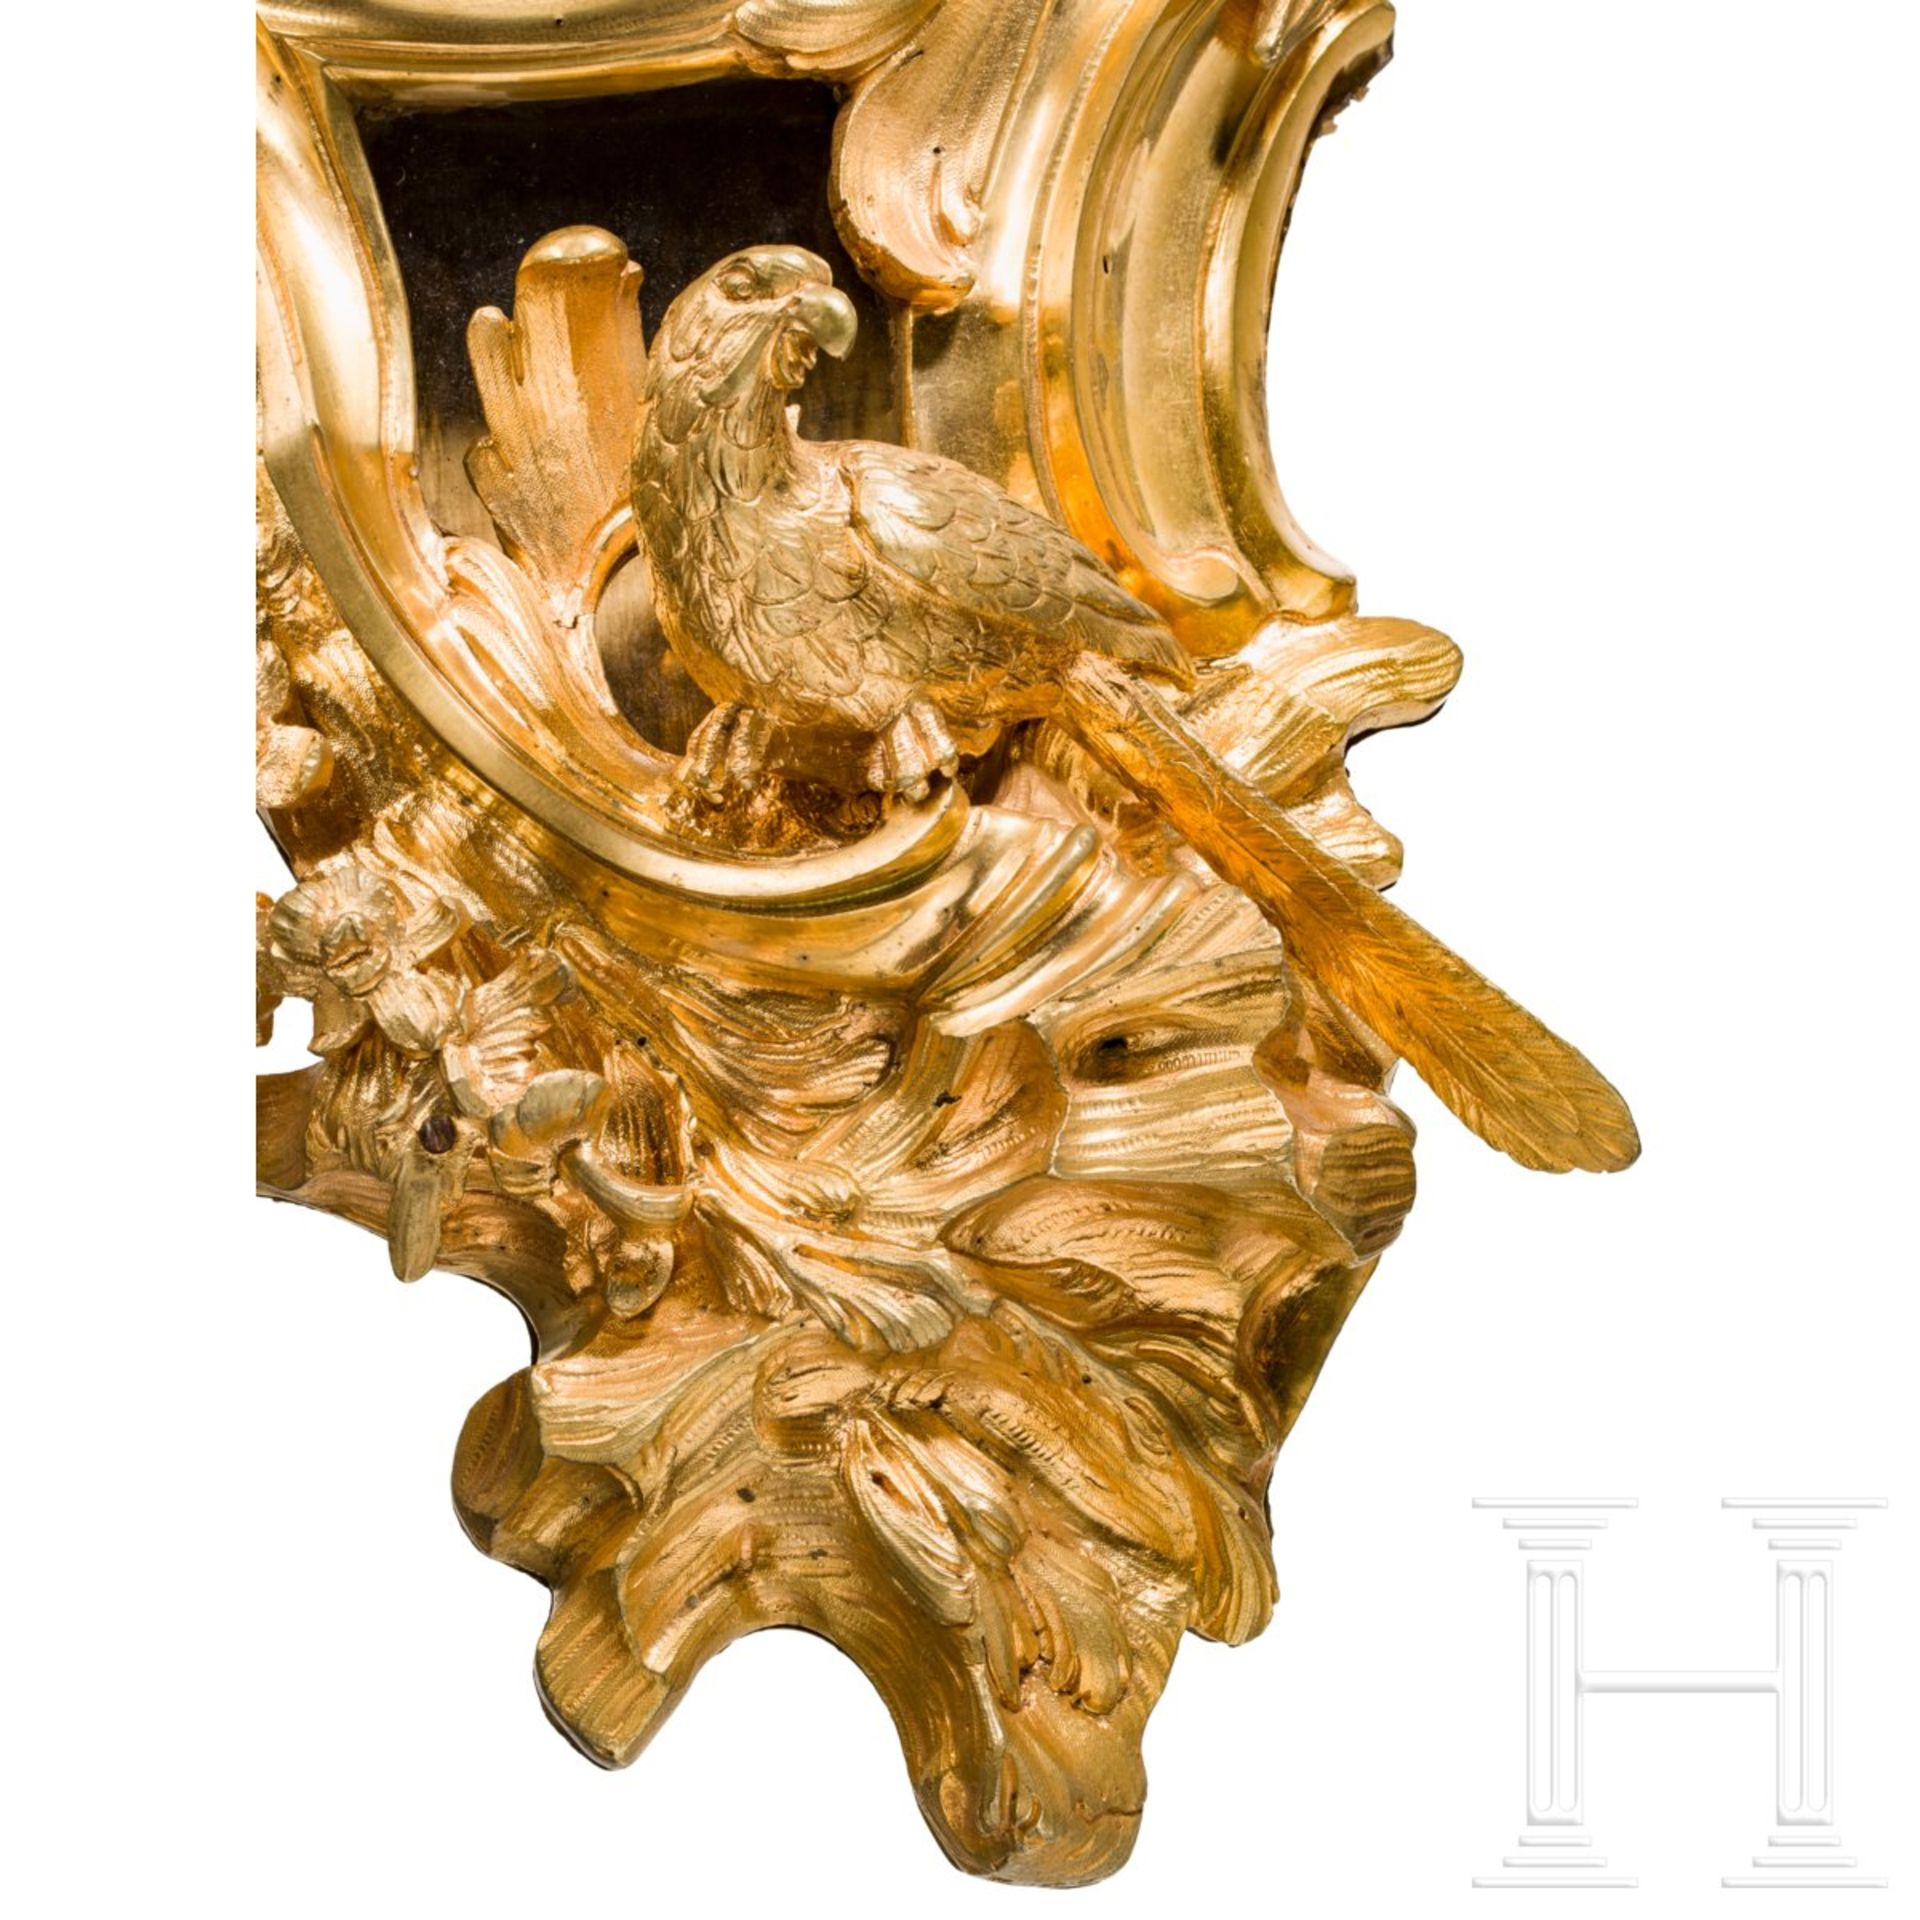 Feuervergoldete Louis XV-Carteluhr, Dupont in Paris, Mitte 18. Jhdt. - Image 6 of 7